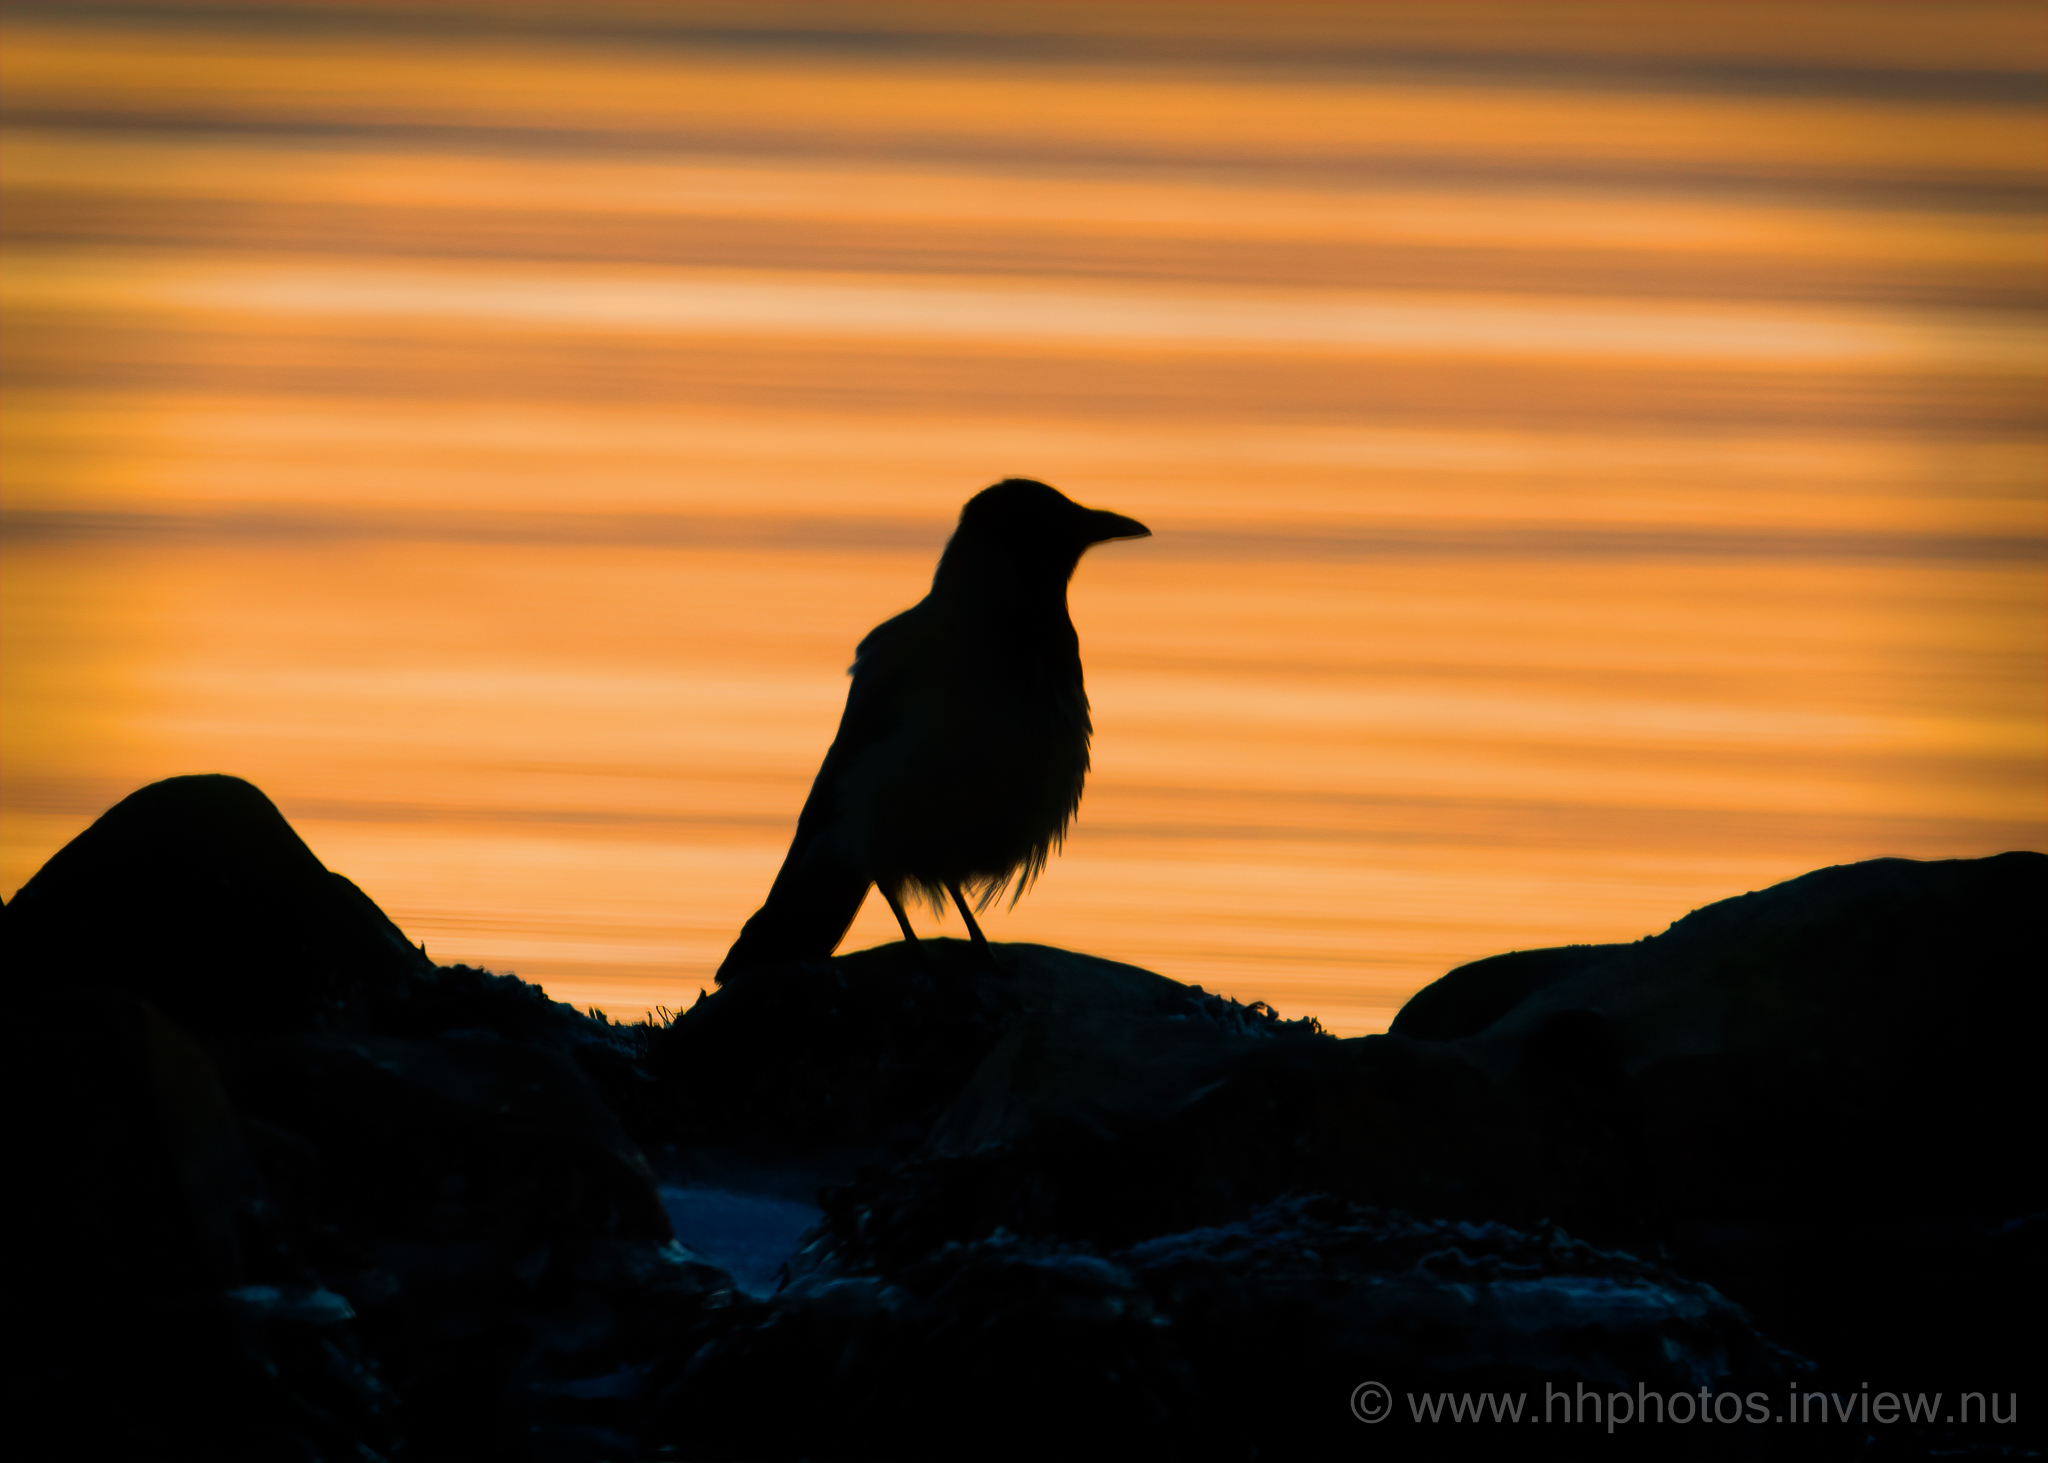 Kråka i solnedgång / Hooded crow in sunset